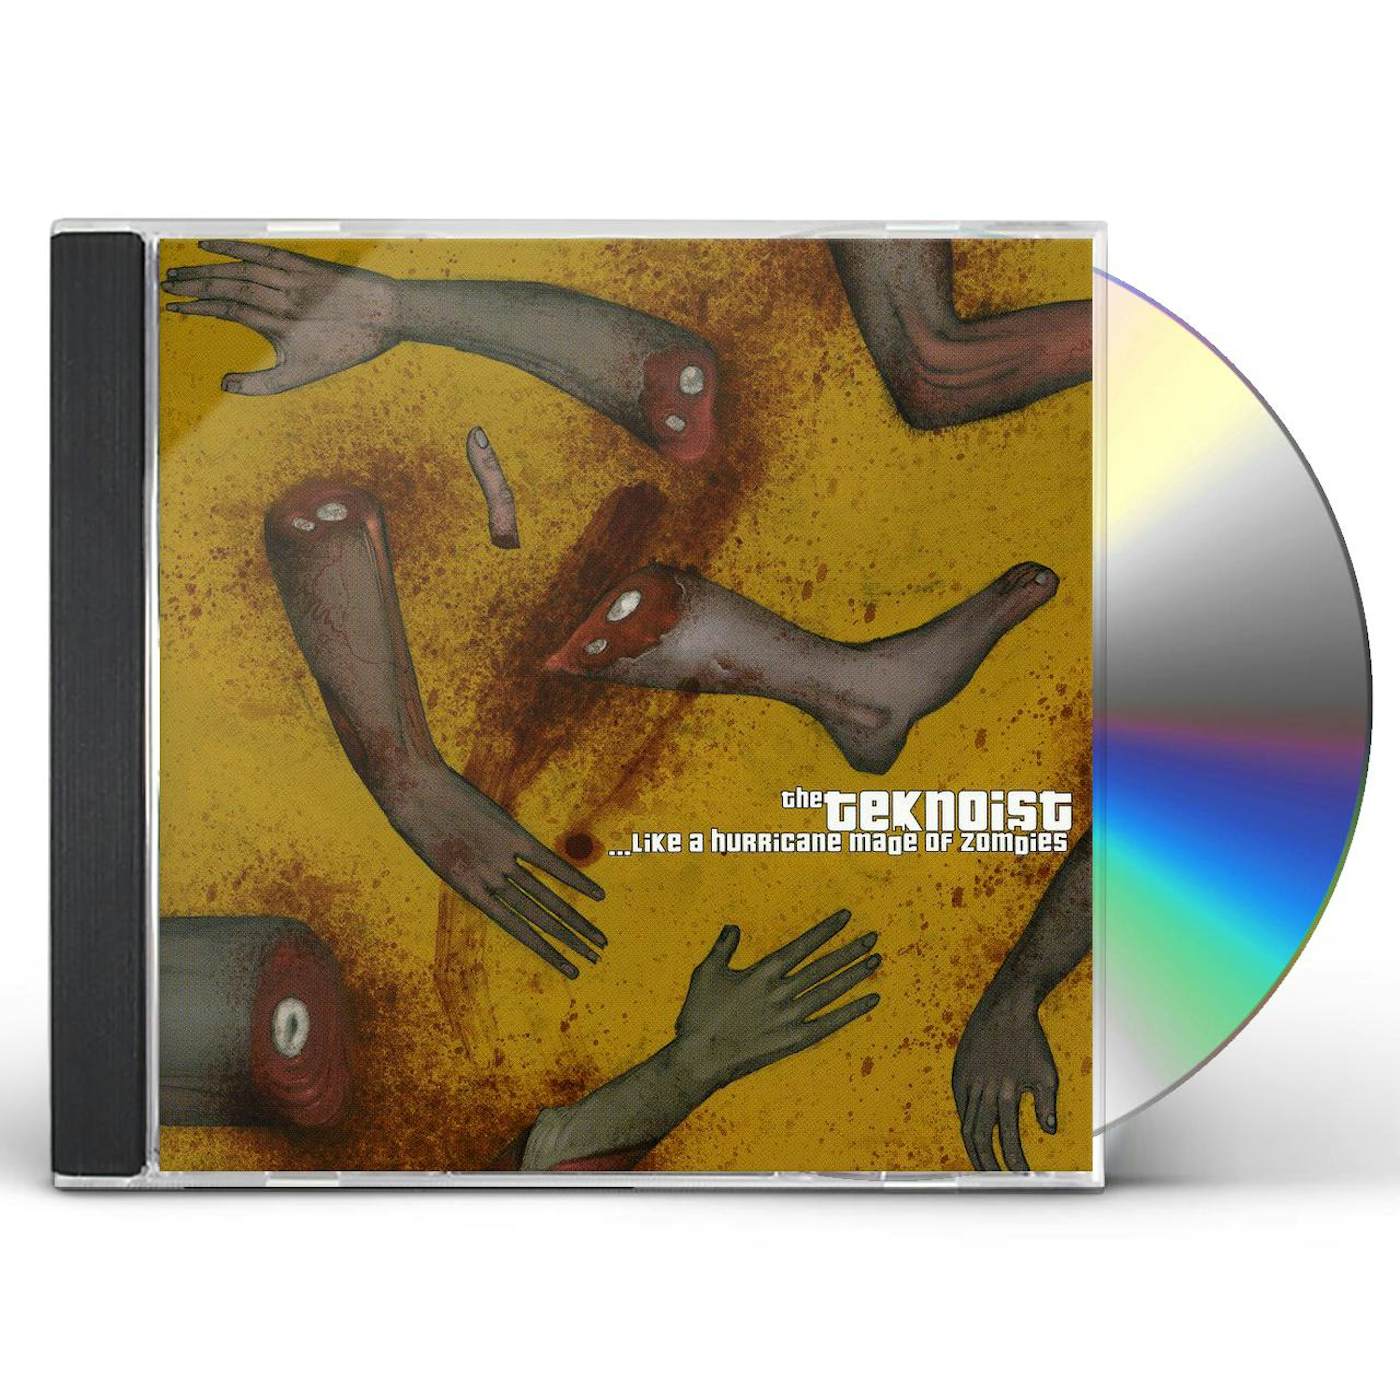 The Teknoist LIKE A HURRICANE MADE OF ZOMBIES CD